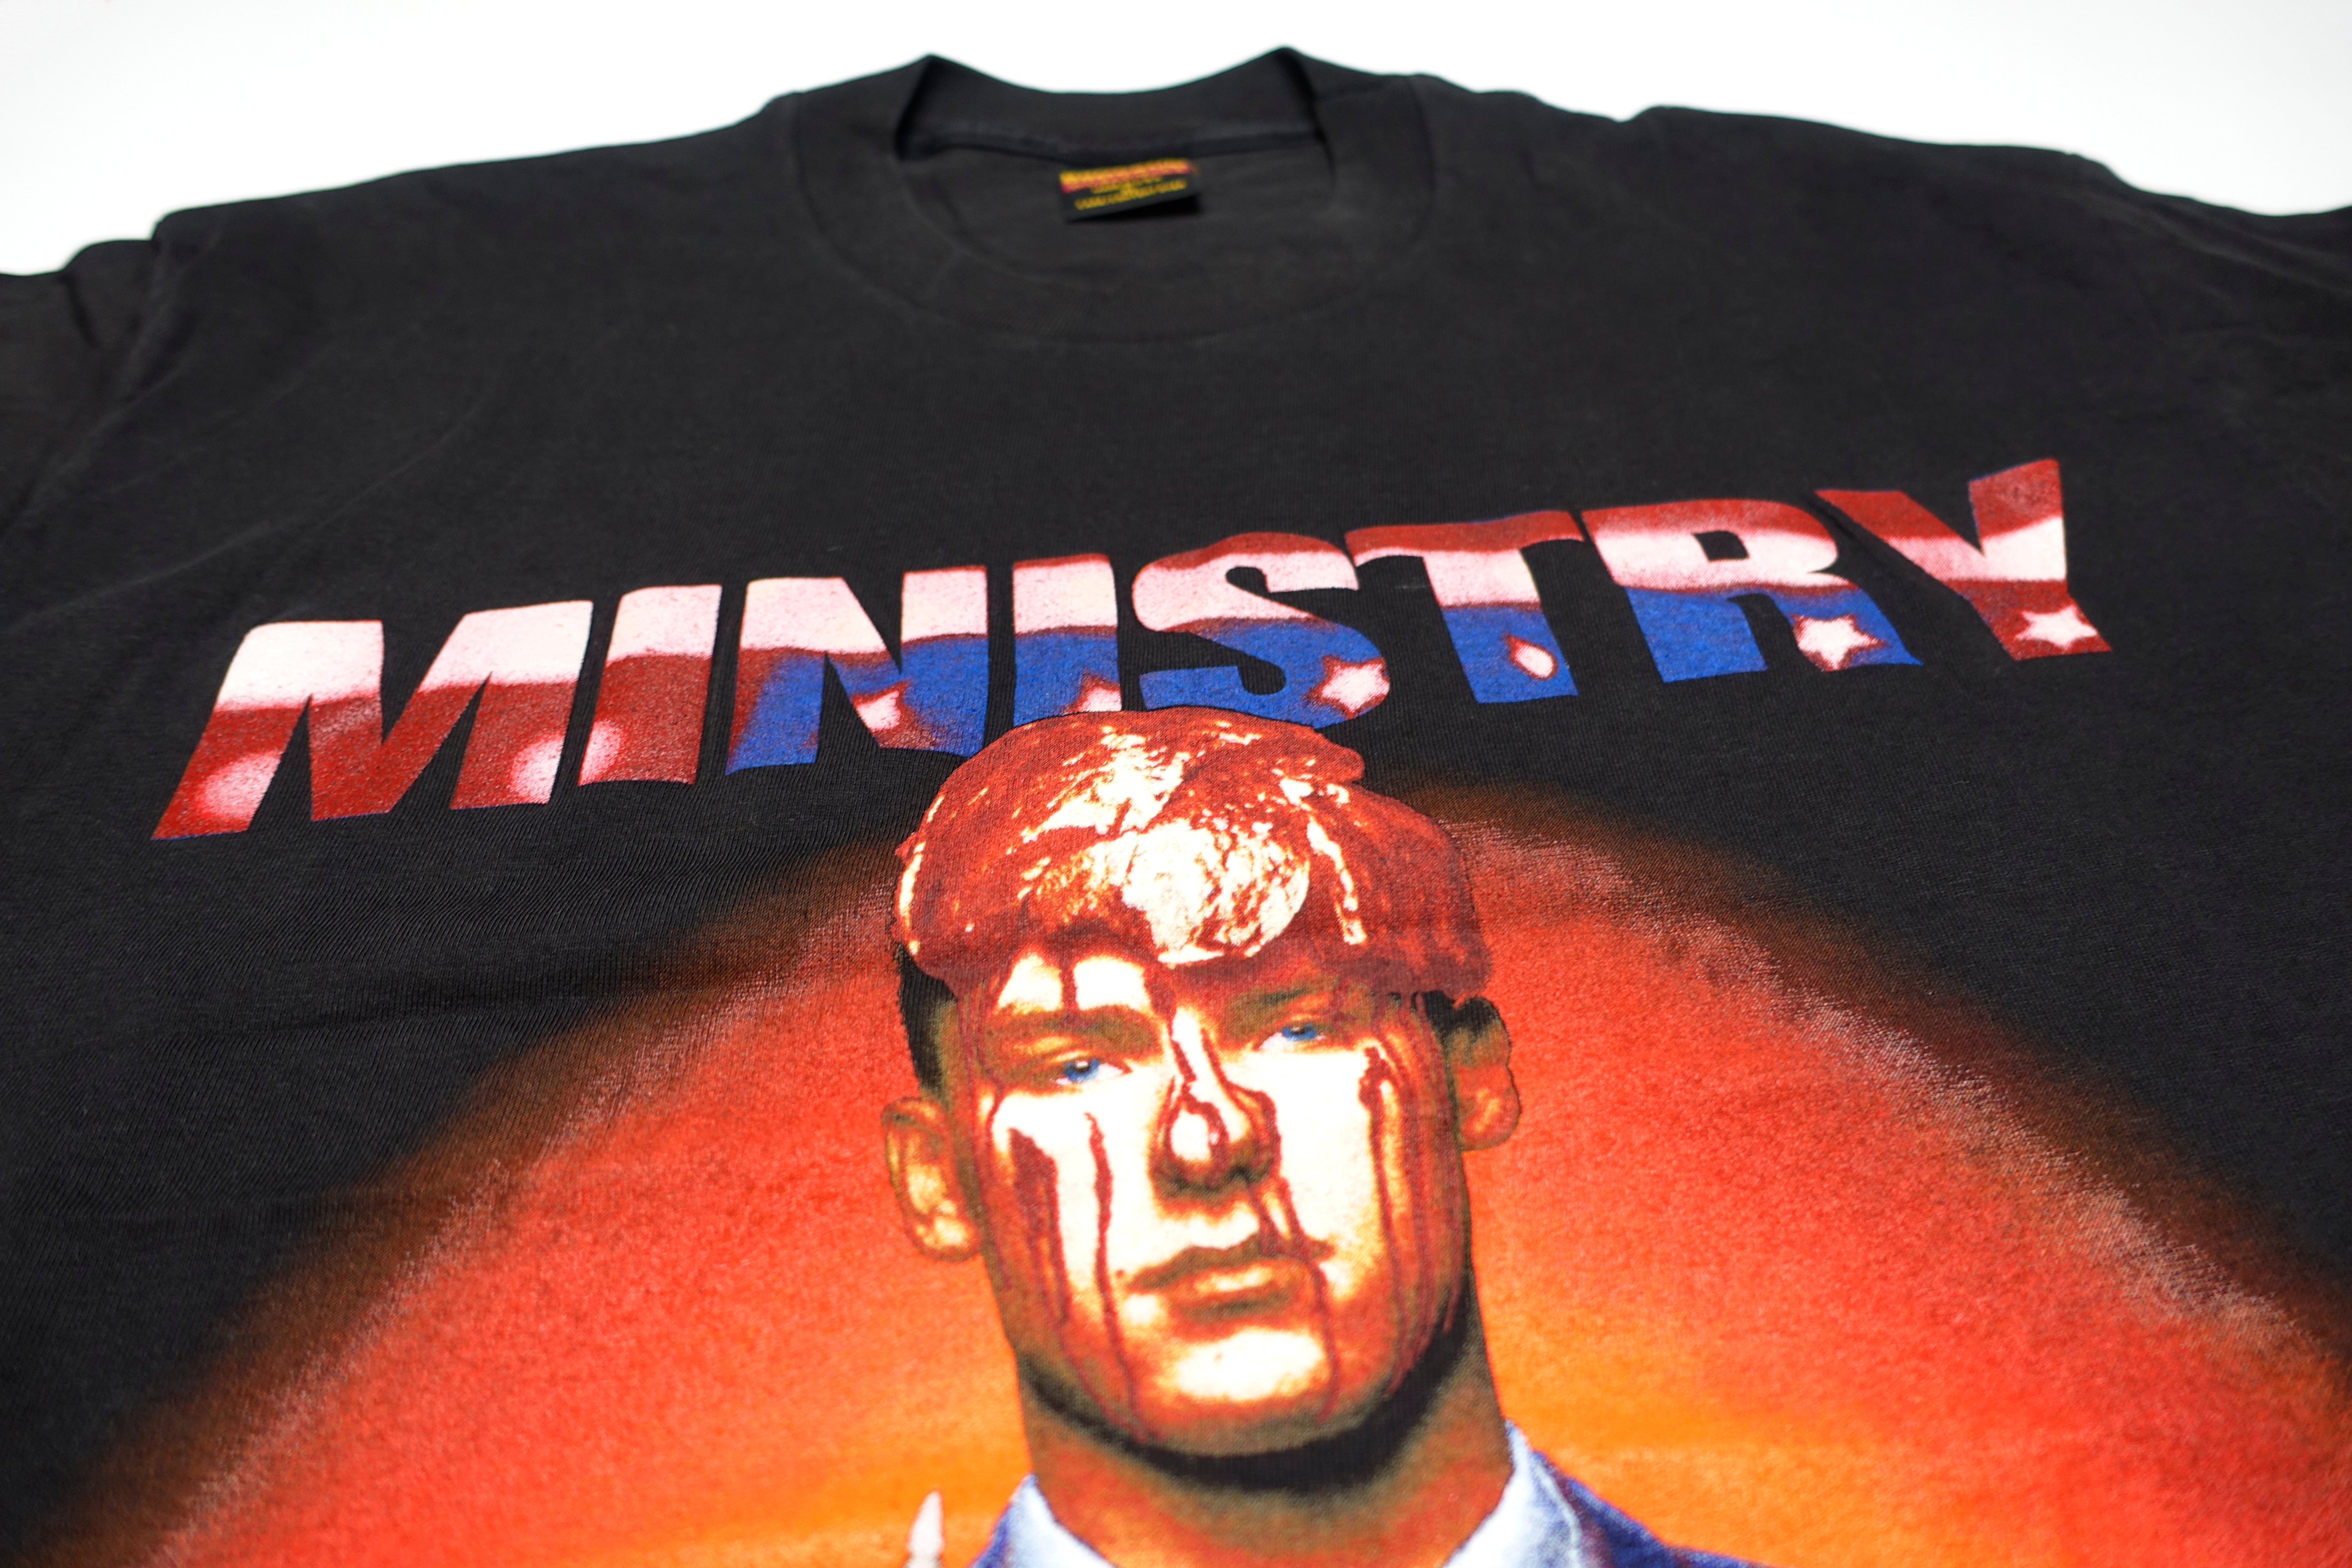 Ministry - Filthy Pig 1995 Tour Shirt Size XL